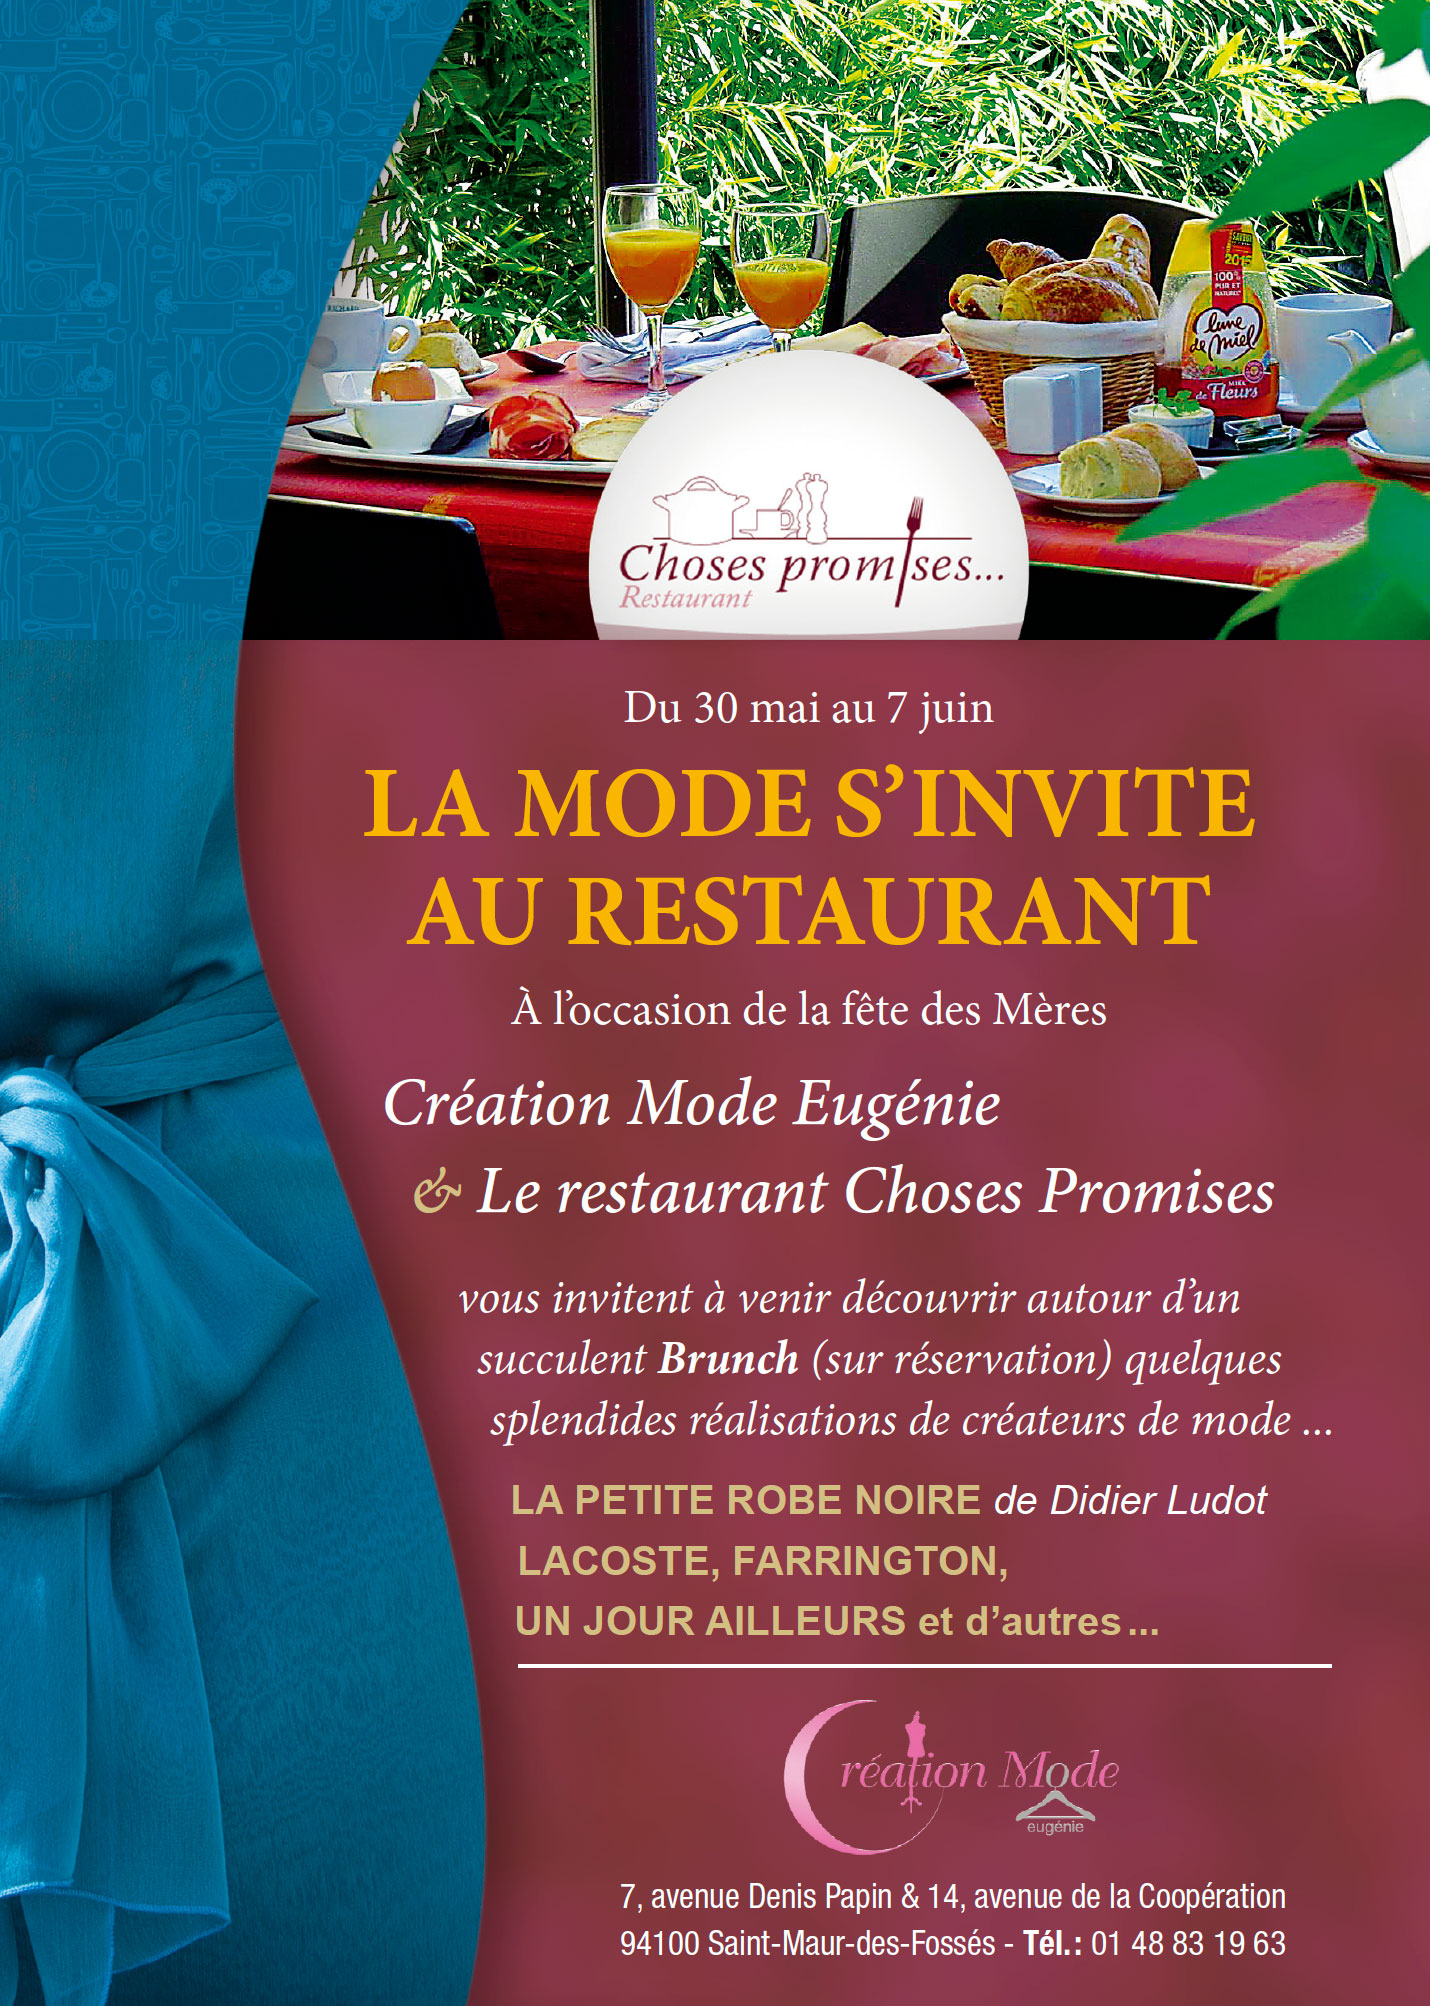 Choses promises, restaurant, flyer, recto